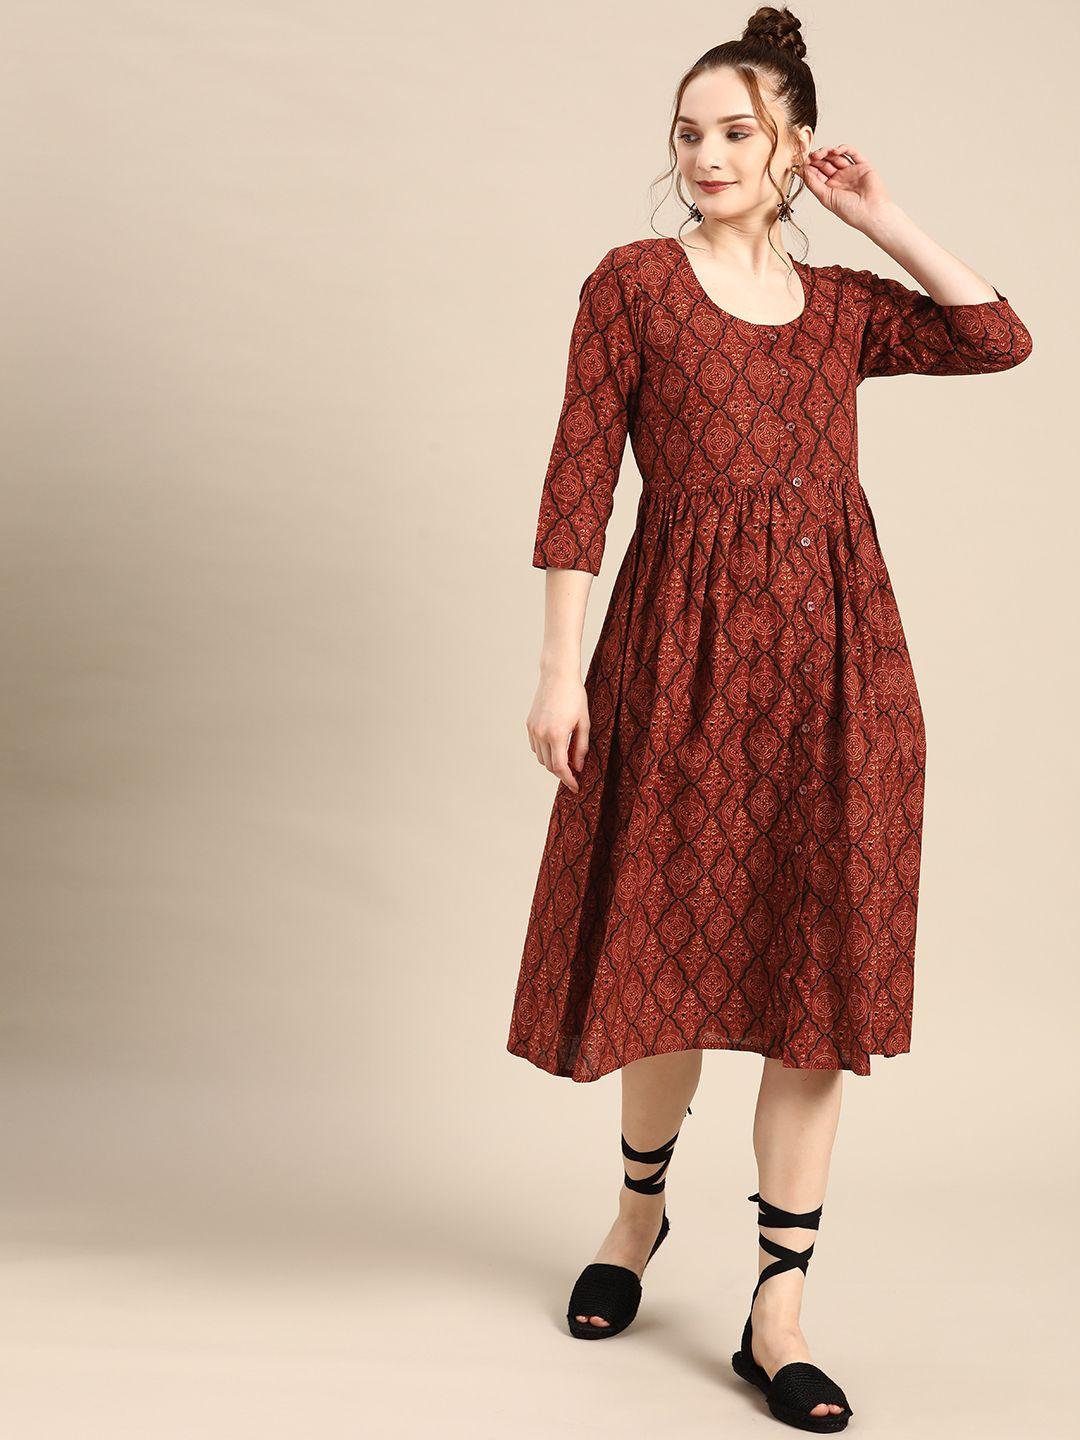 mabish by sonal jain rust brown & black ethnic motifs gathered waist a-line midi dress